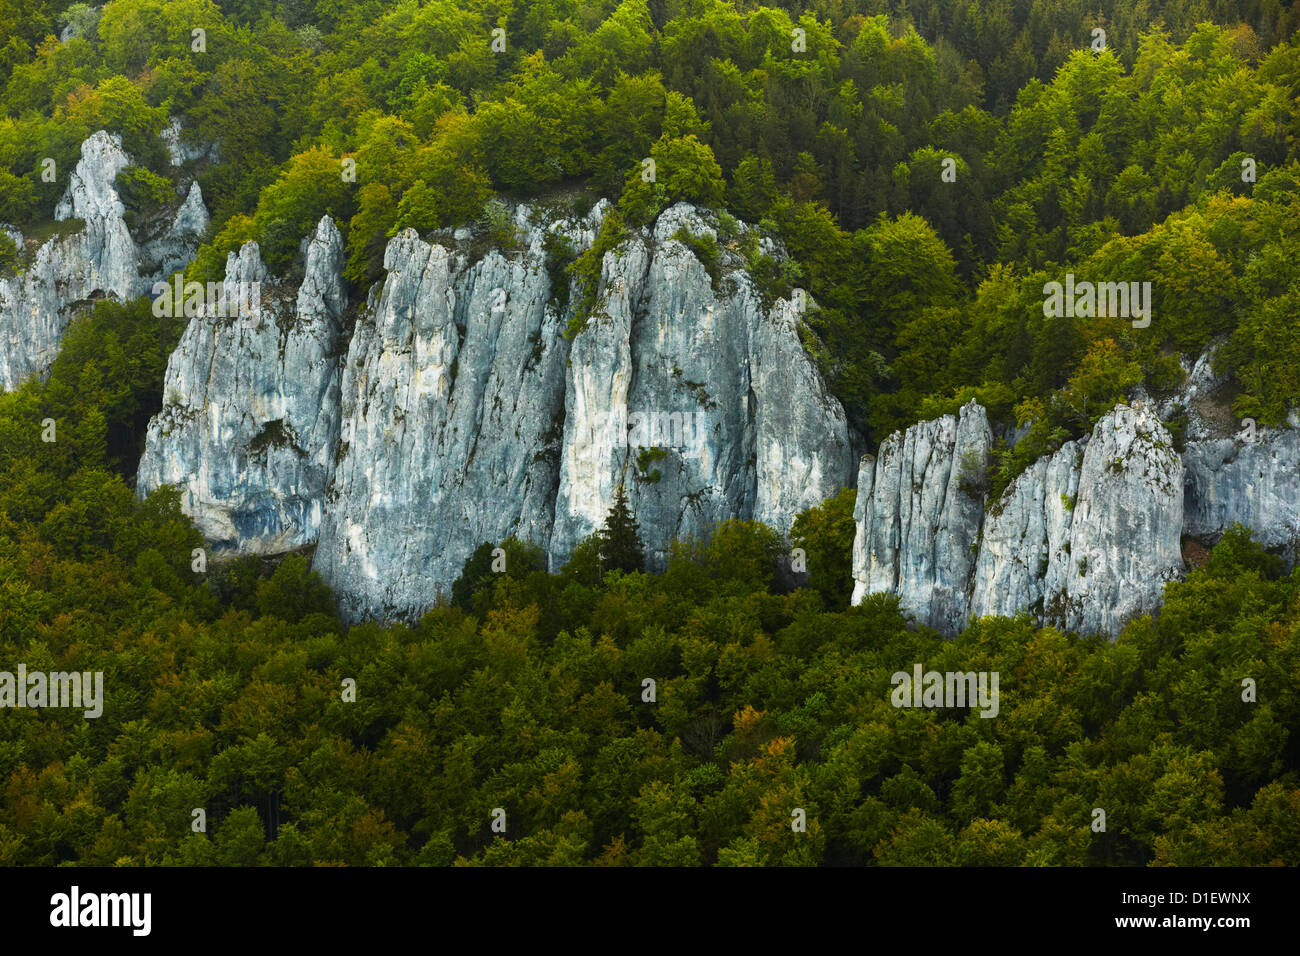 Limestone rocks in the Danube Valley near Hausen, aerial photo Stock Photo